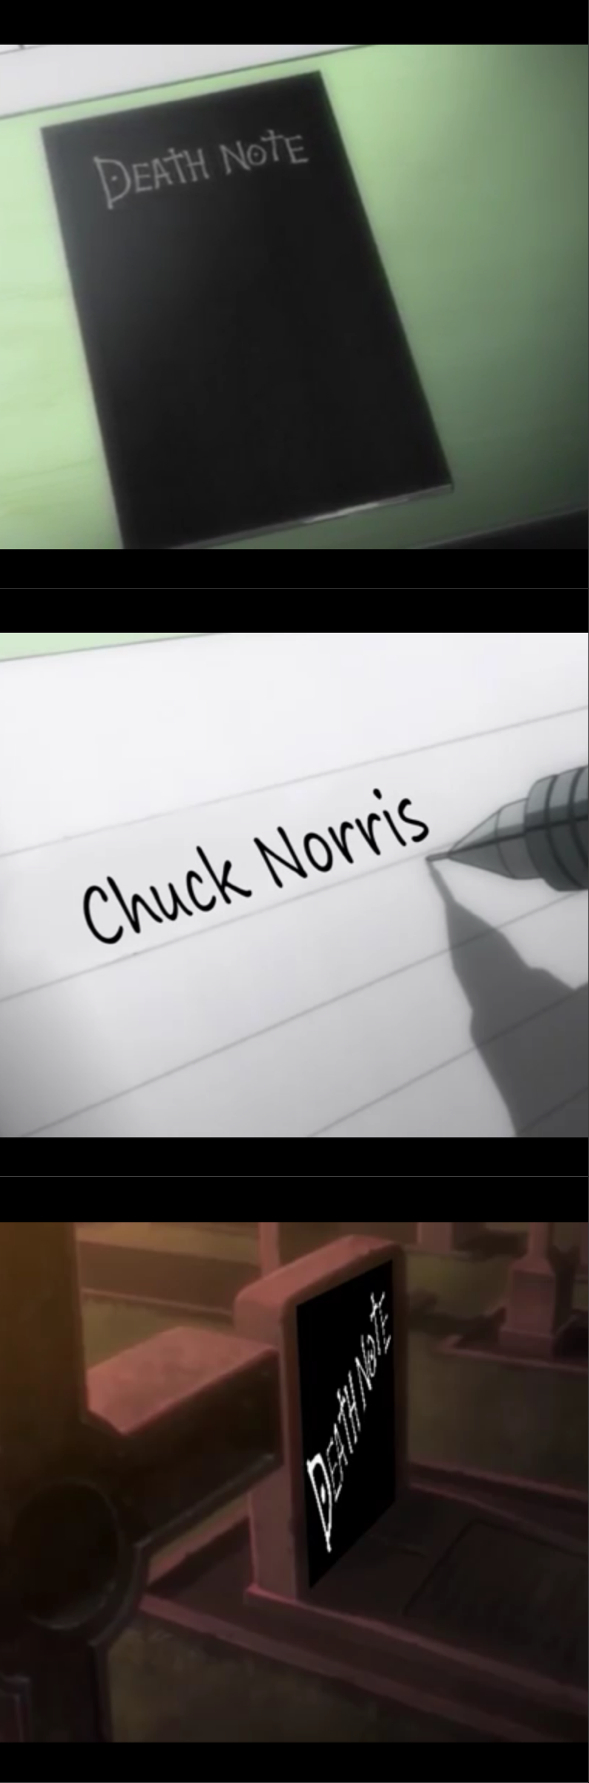 Nem msm o Death note mata o Chuck Norris - meme